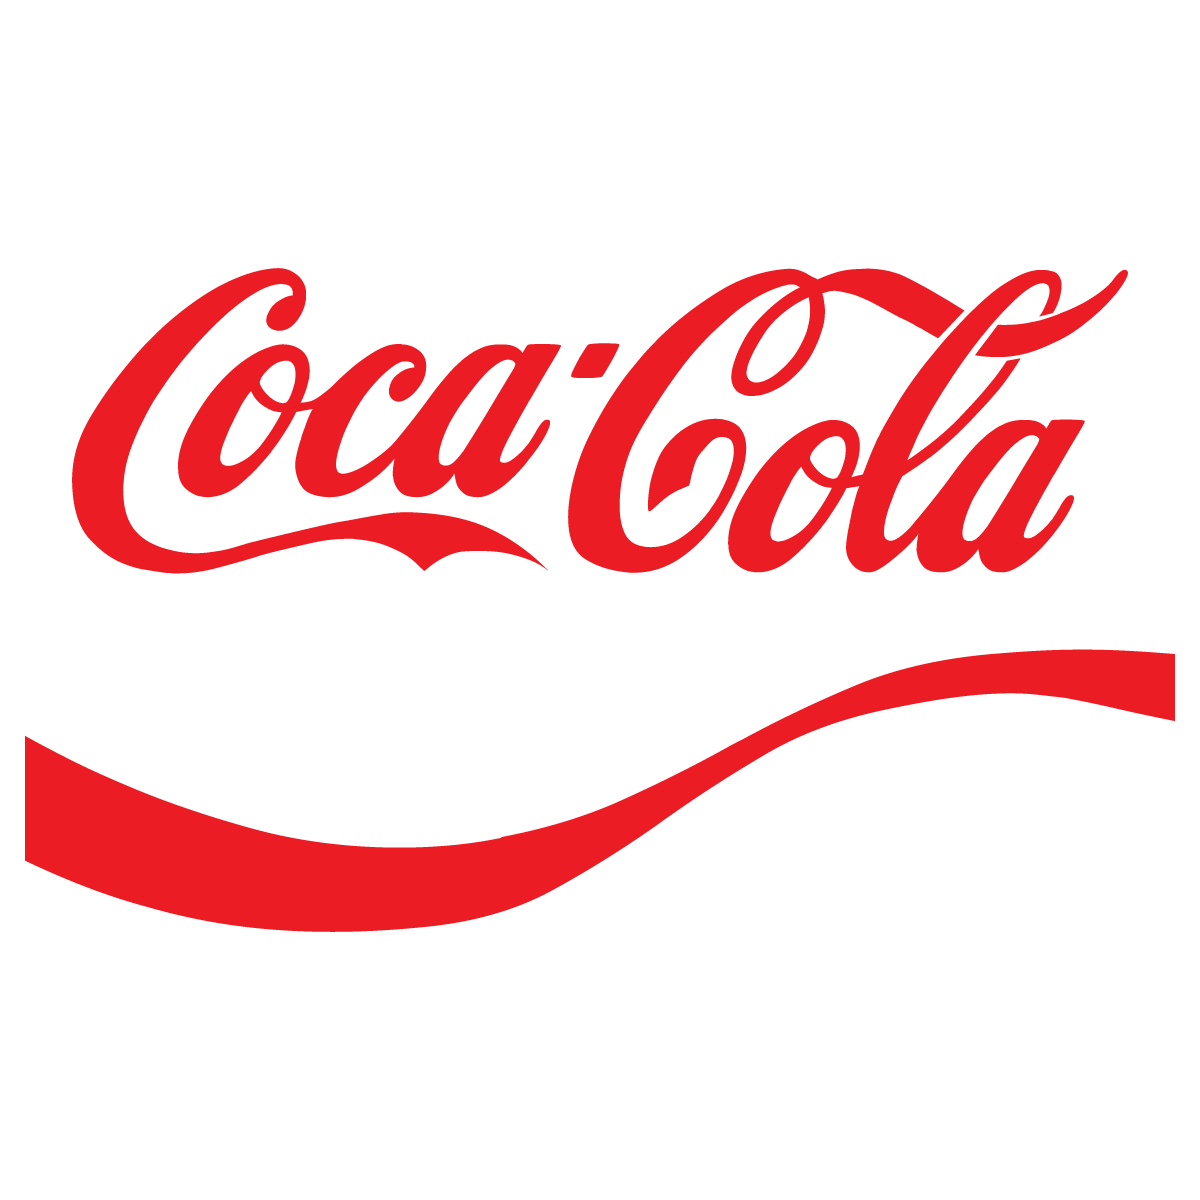 Cocola Logo - Coca Cola Logo Vector Transparent | Free Vector Silhouette Graphics ...